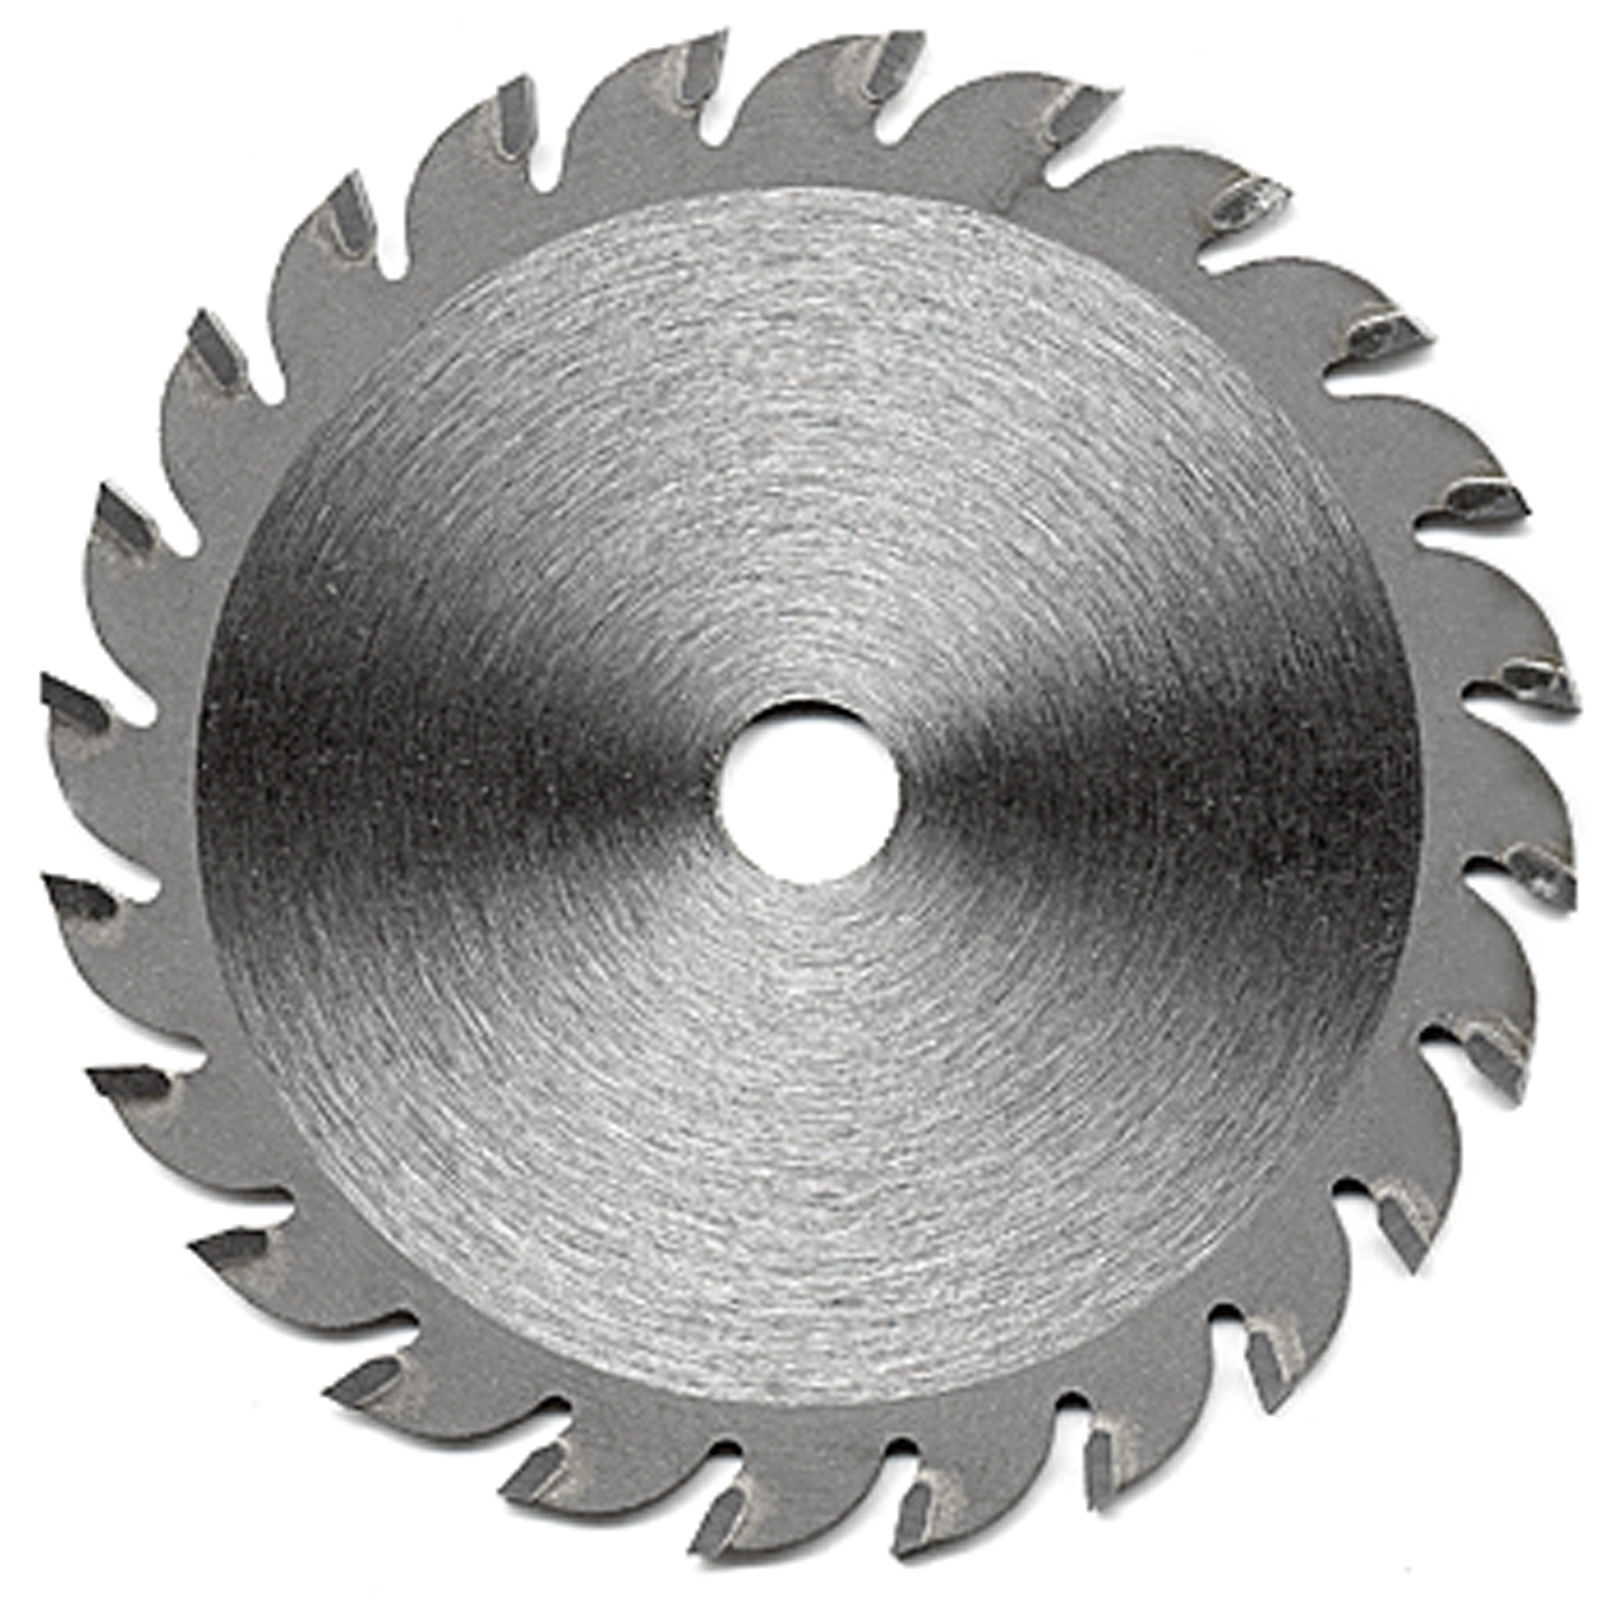 24 Tooth Carbide Tip Saw Blade (3-1/4 Inch Dia., 10 mm hole)